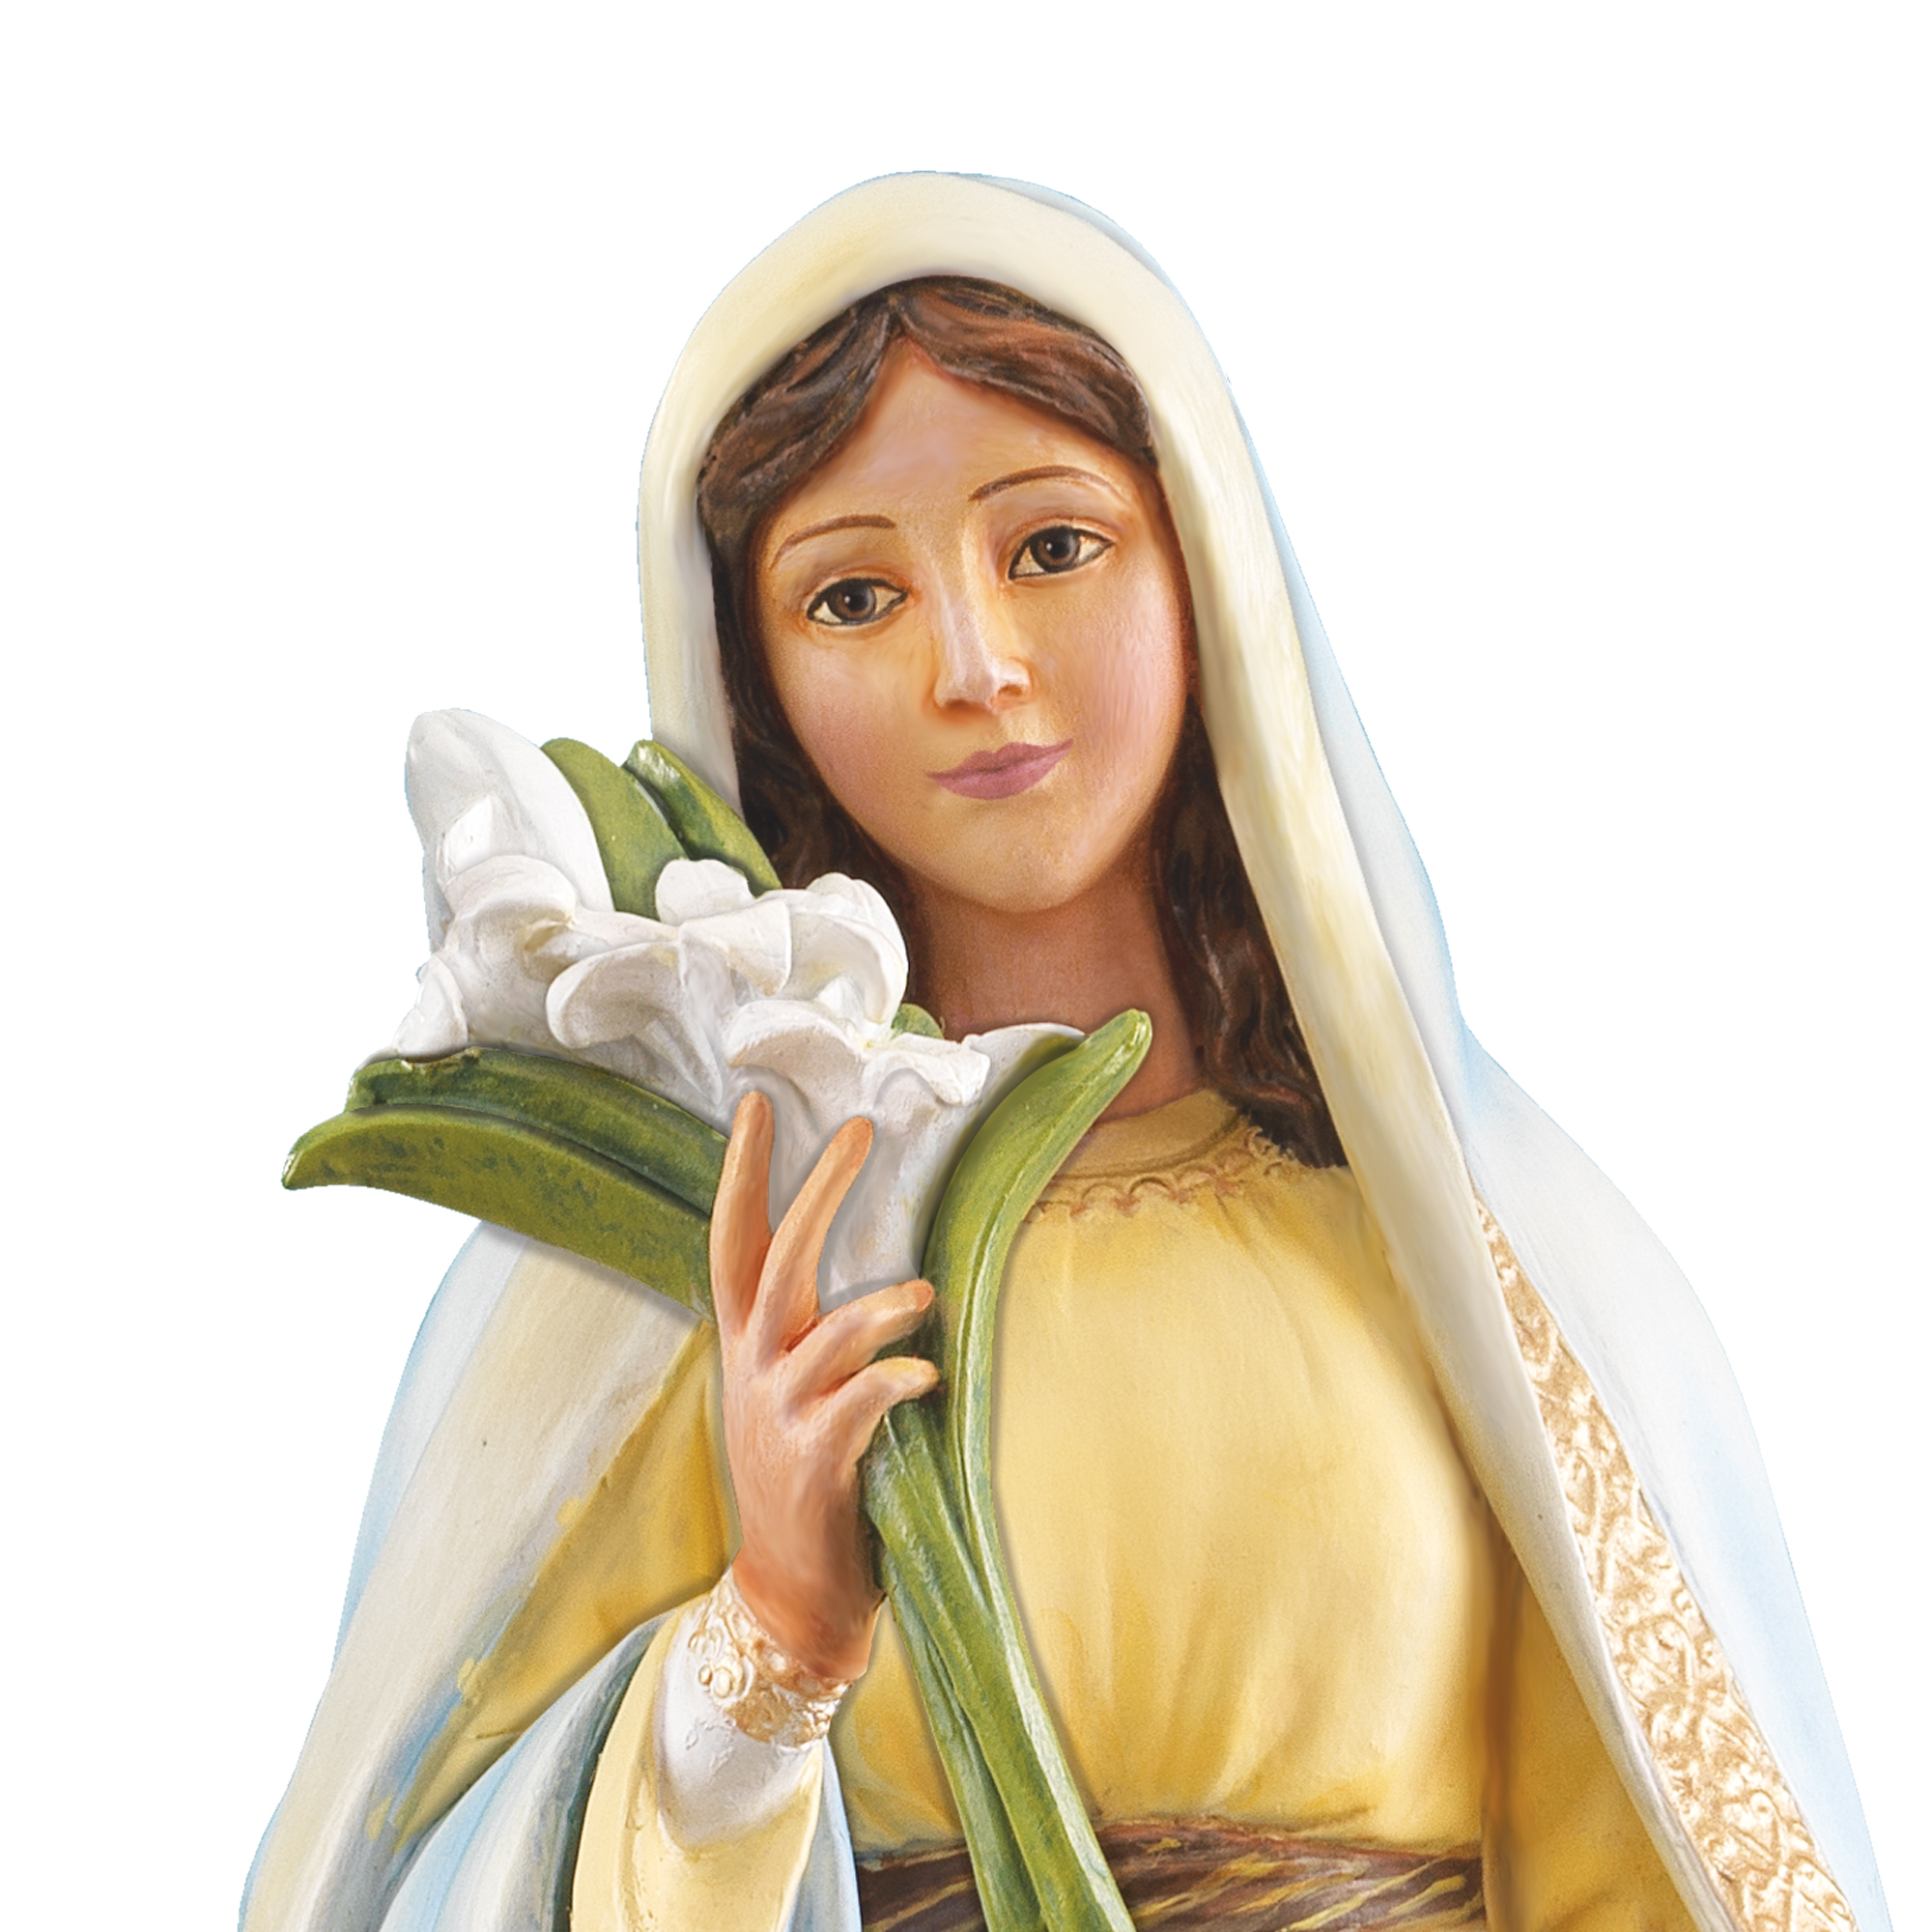 Hail Mary Full of Grace Figurine 6295 0019 a main